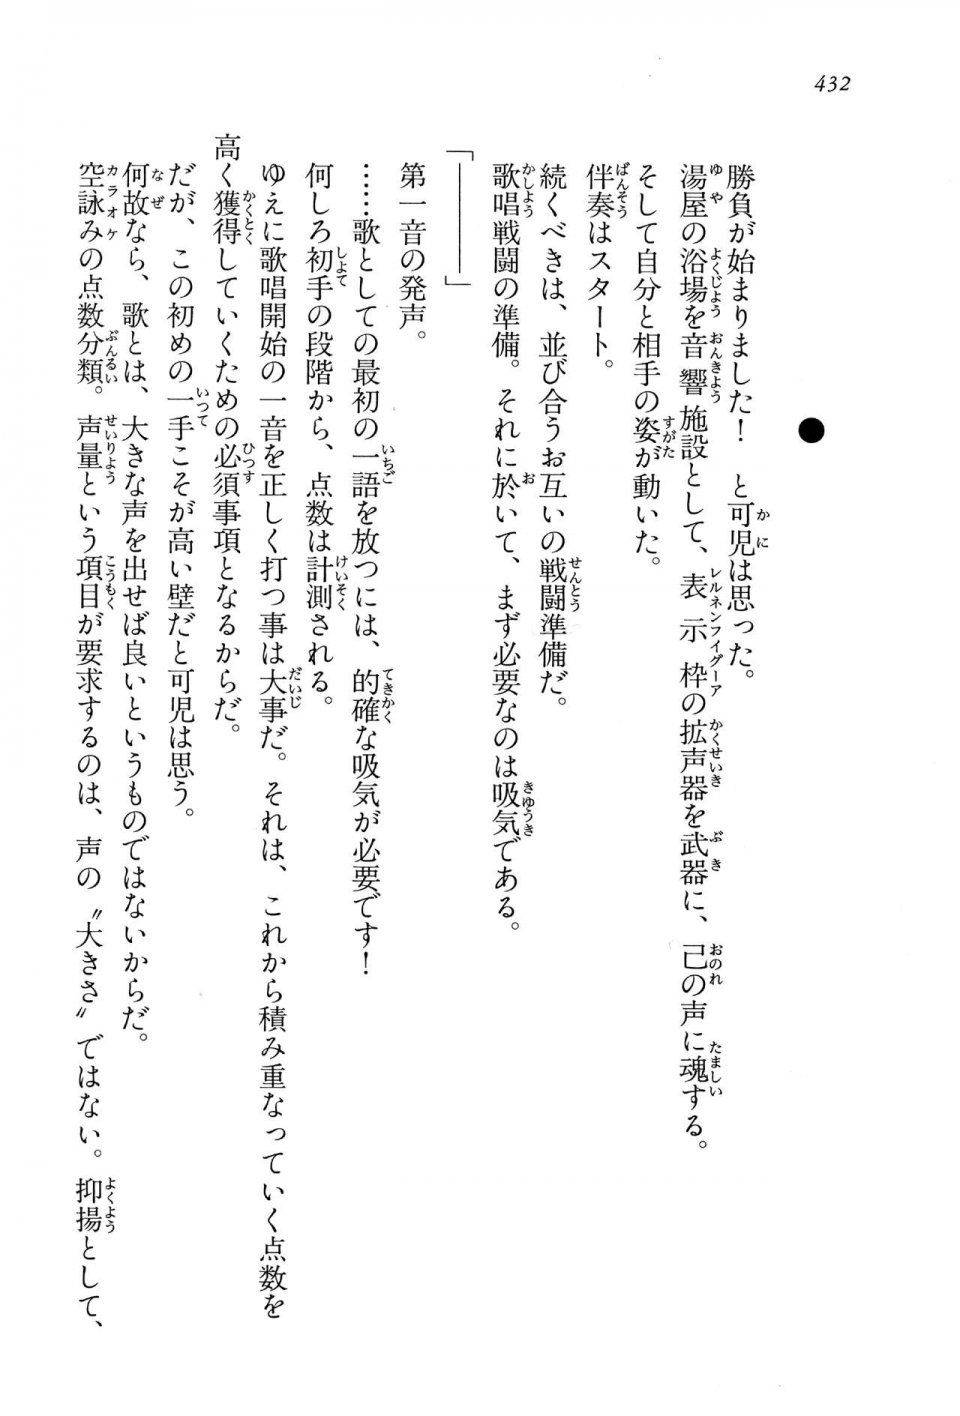 Kyoukai Senjou no Horizon LN Vol 15(6C) Part 1 - Photo #432